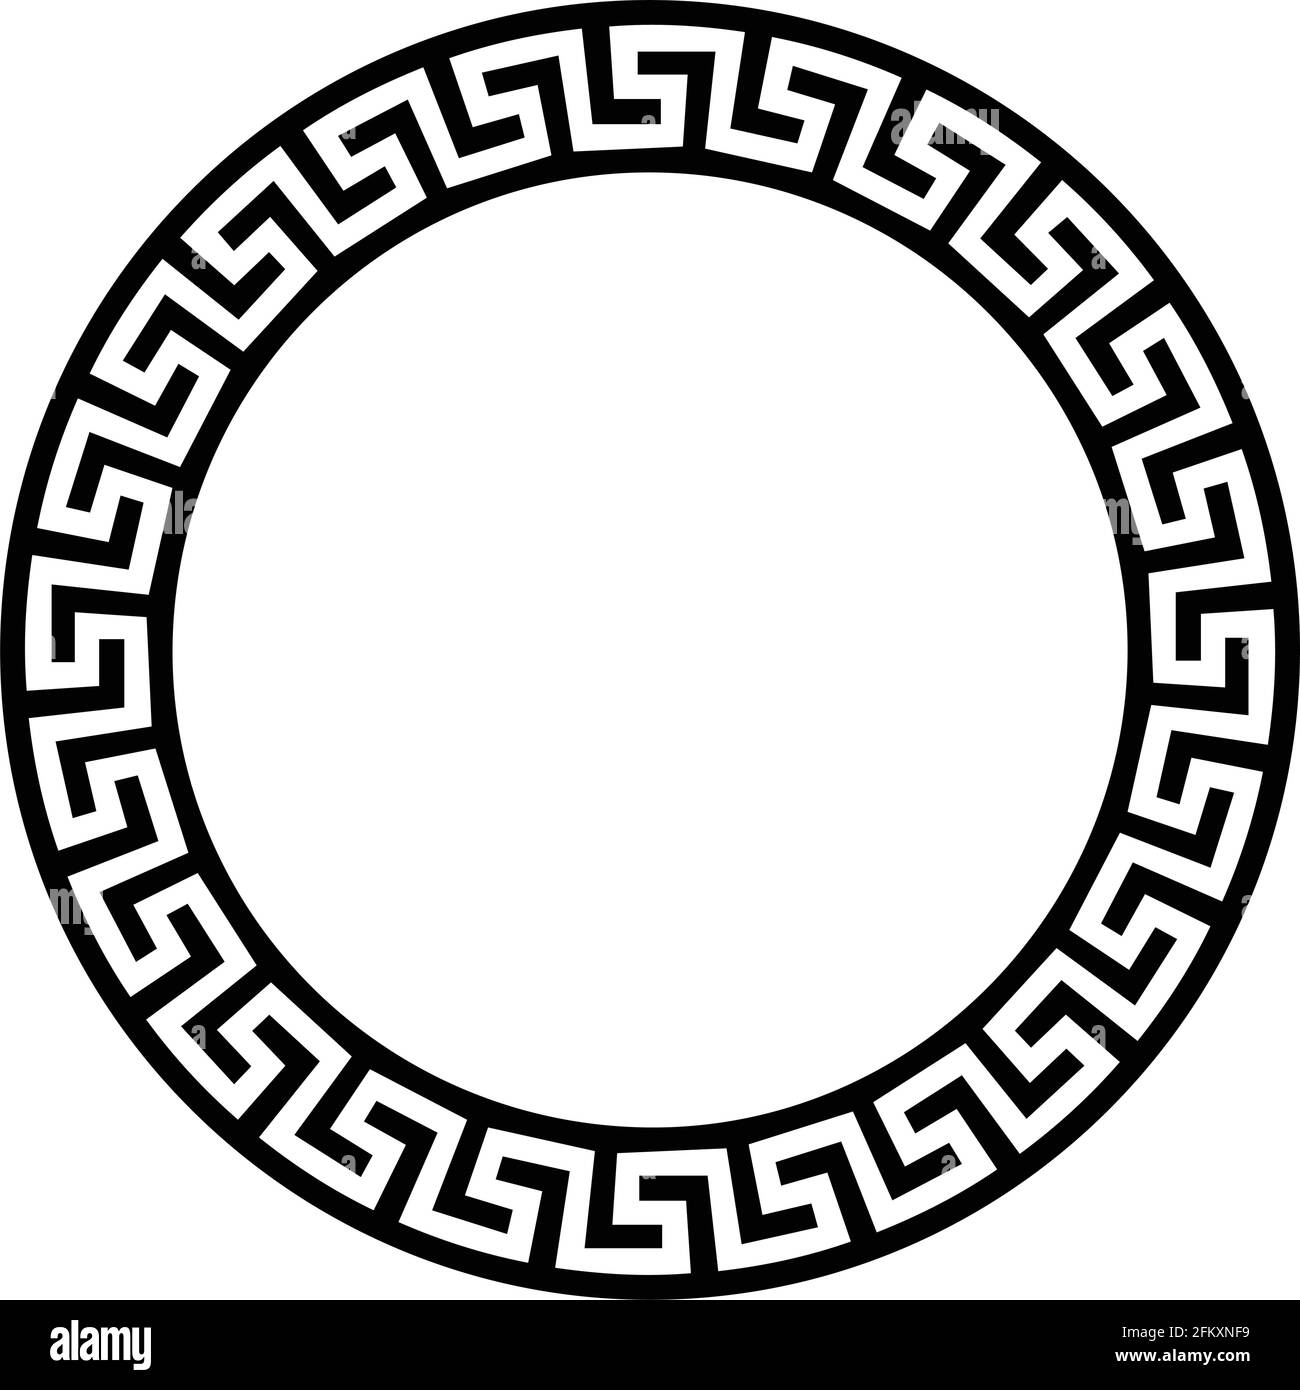 Motif circulaire Versace grec Image Vectorielle Stock - Alamy